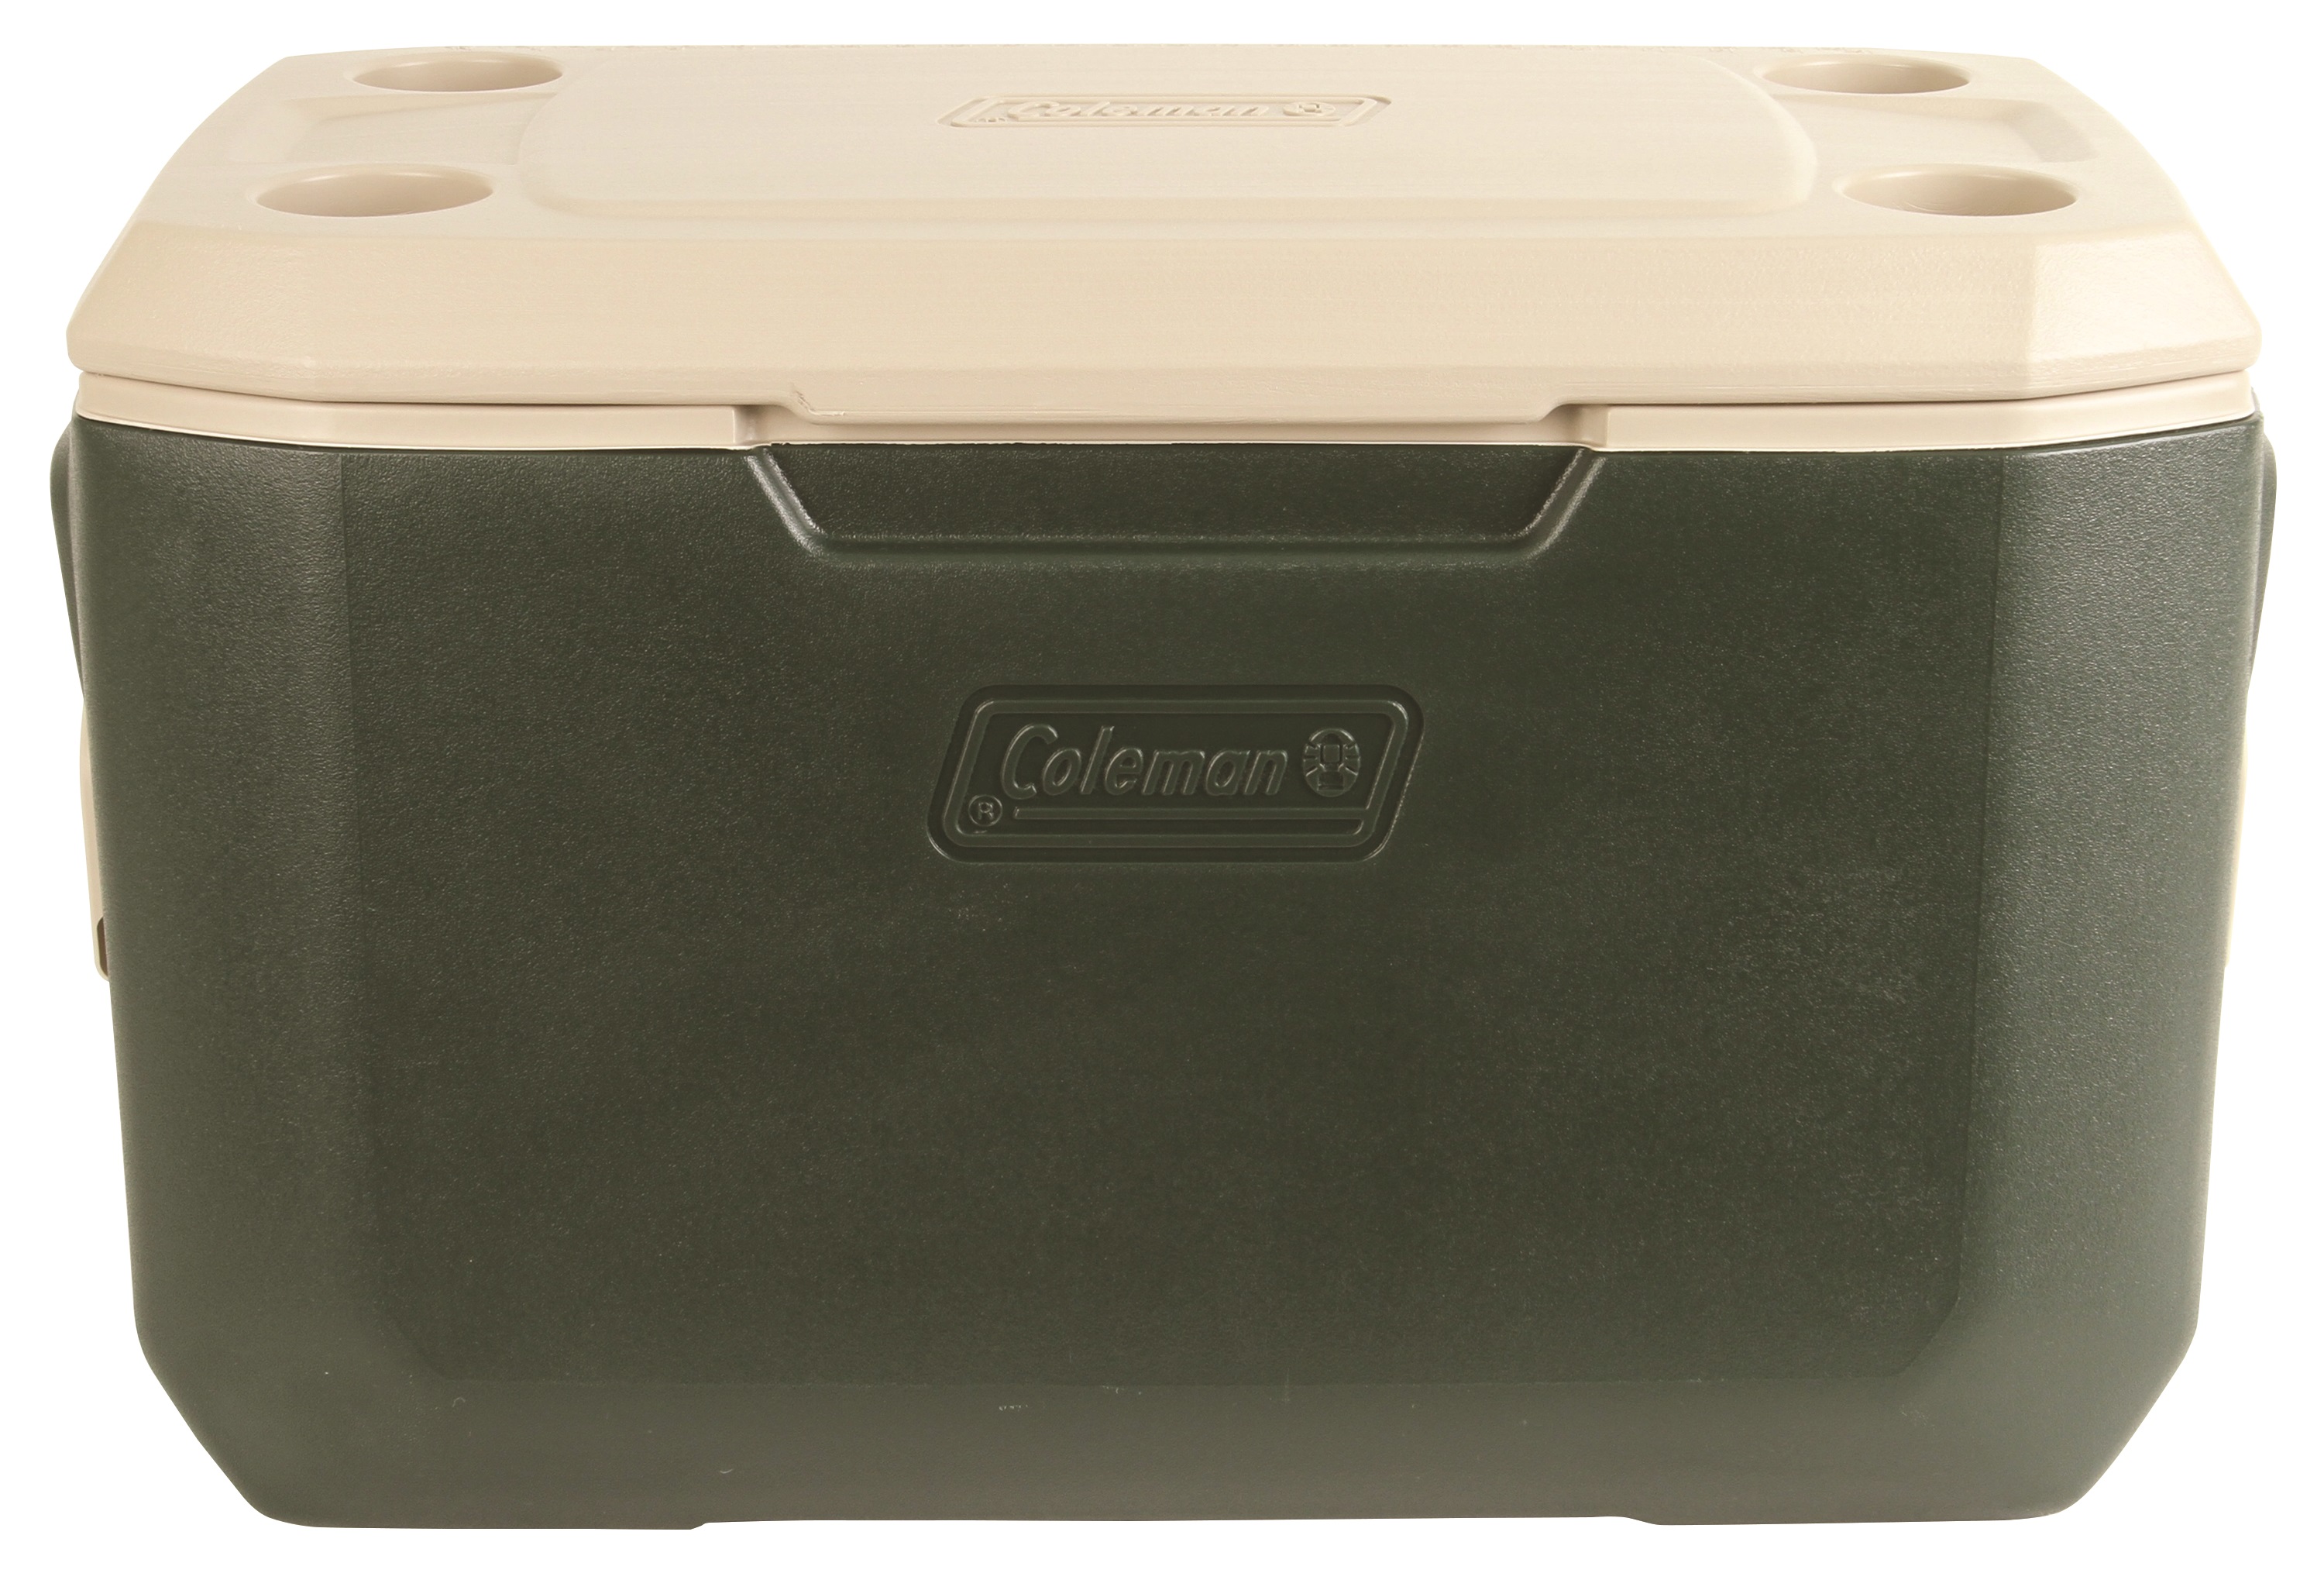 Coleman 70-quart Xtreme 5 cooler for $42